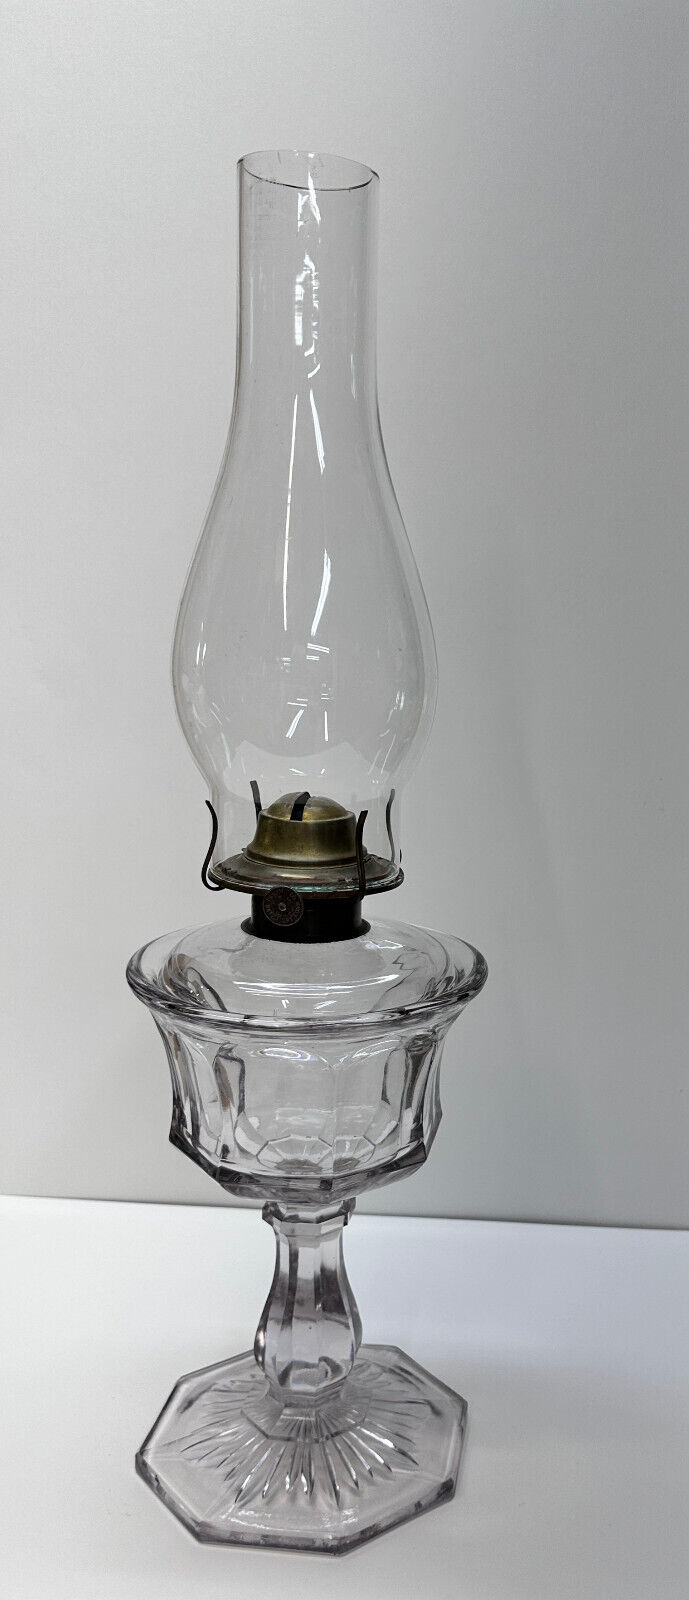 Antique P & A Mfg. Co. Waterbury Conn 8 Panel Oil Kerosene Lamp, Eagle Burner